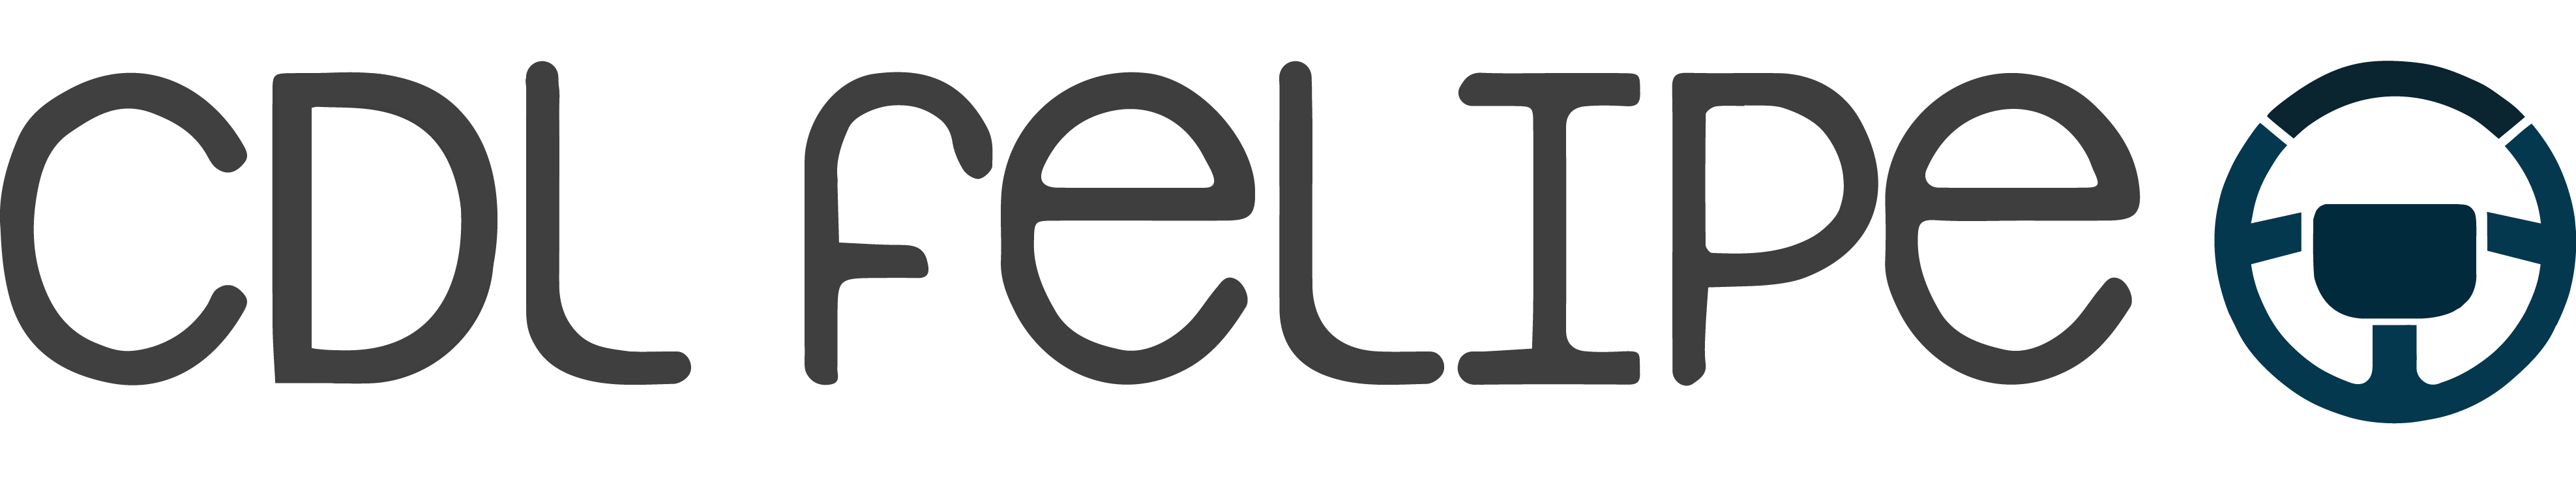 Felipe CDL Service – ELDT School Bus Theory (Español)